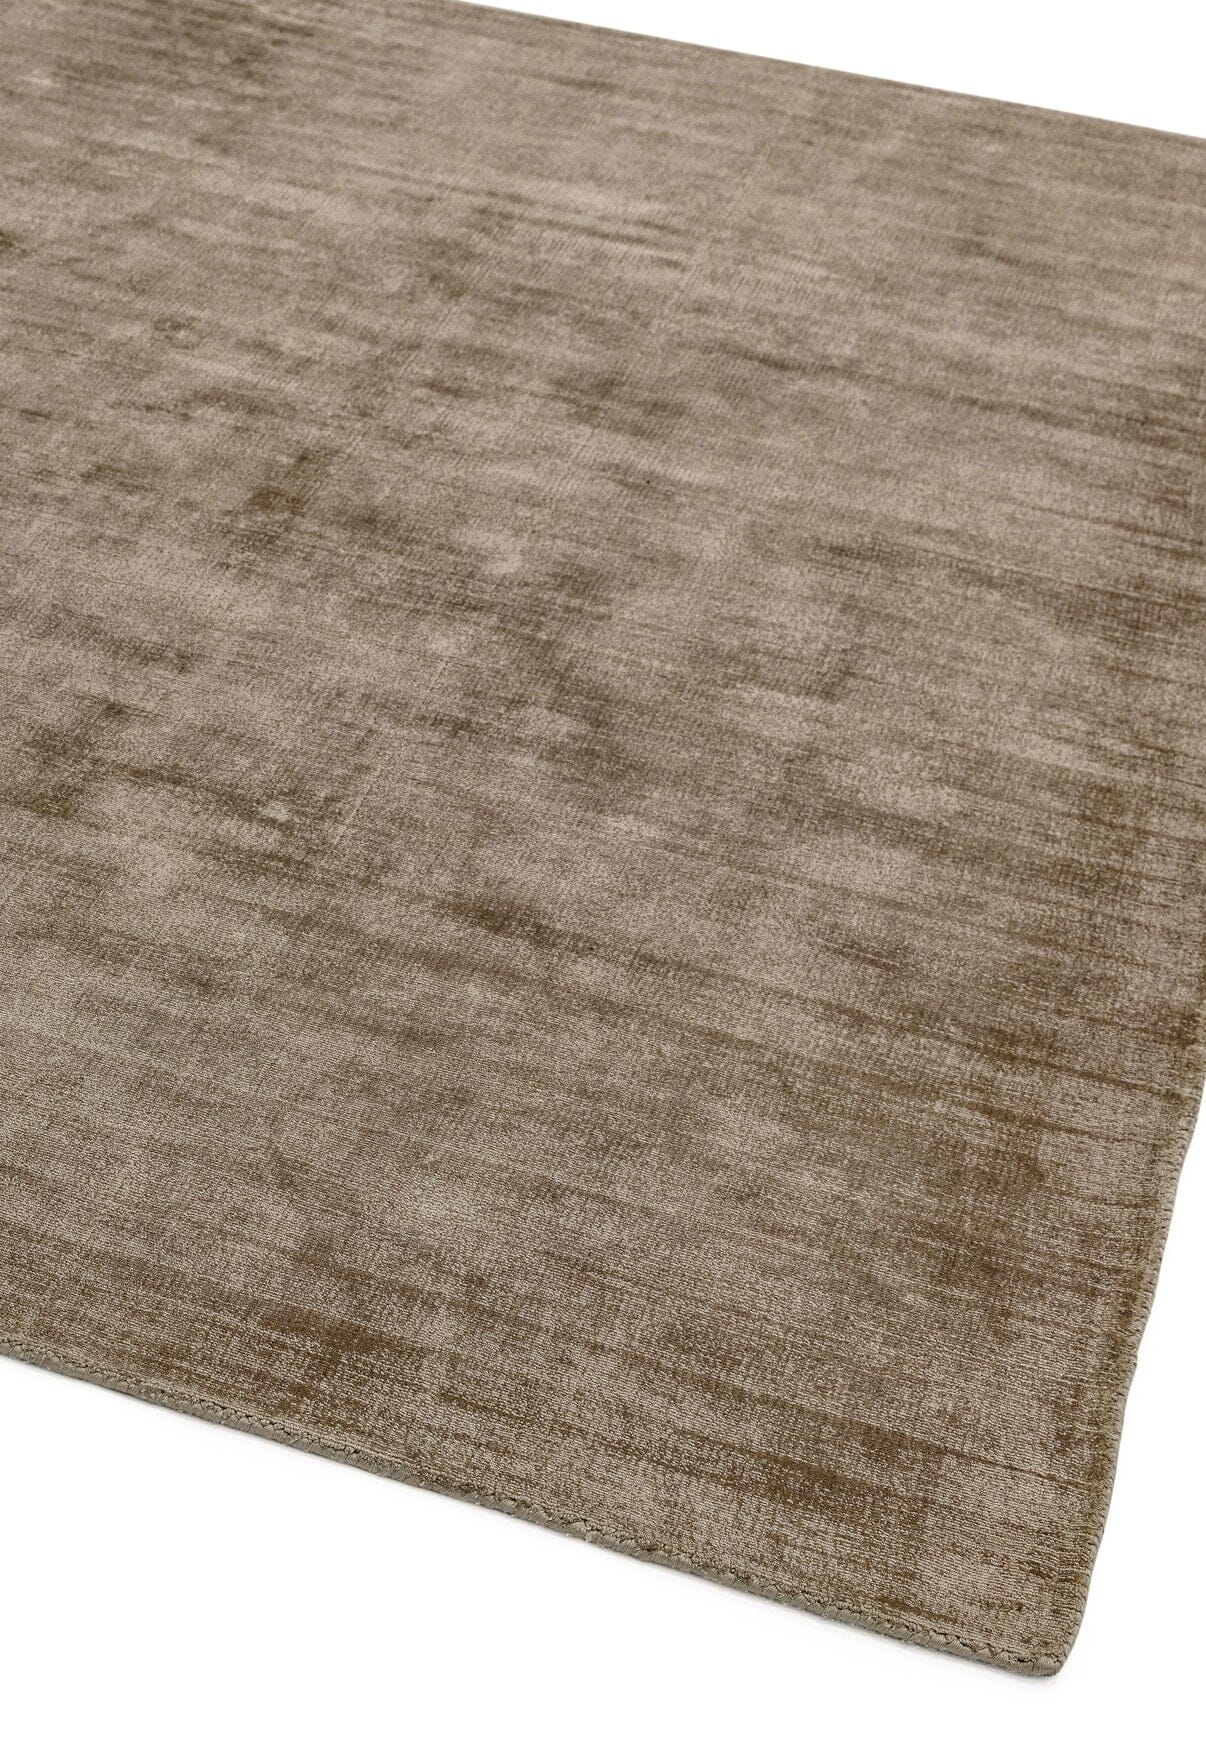 Asiatic Carpets Blade Hand Woven Rug Mocha - 160 x 230cm